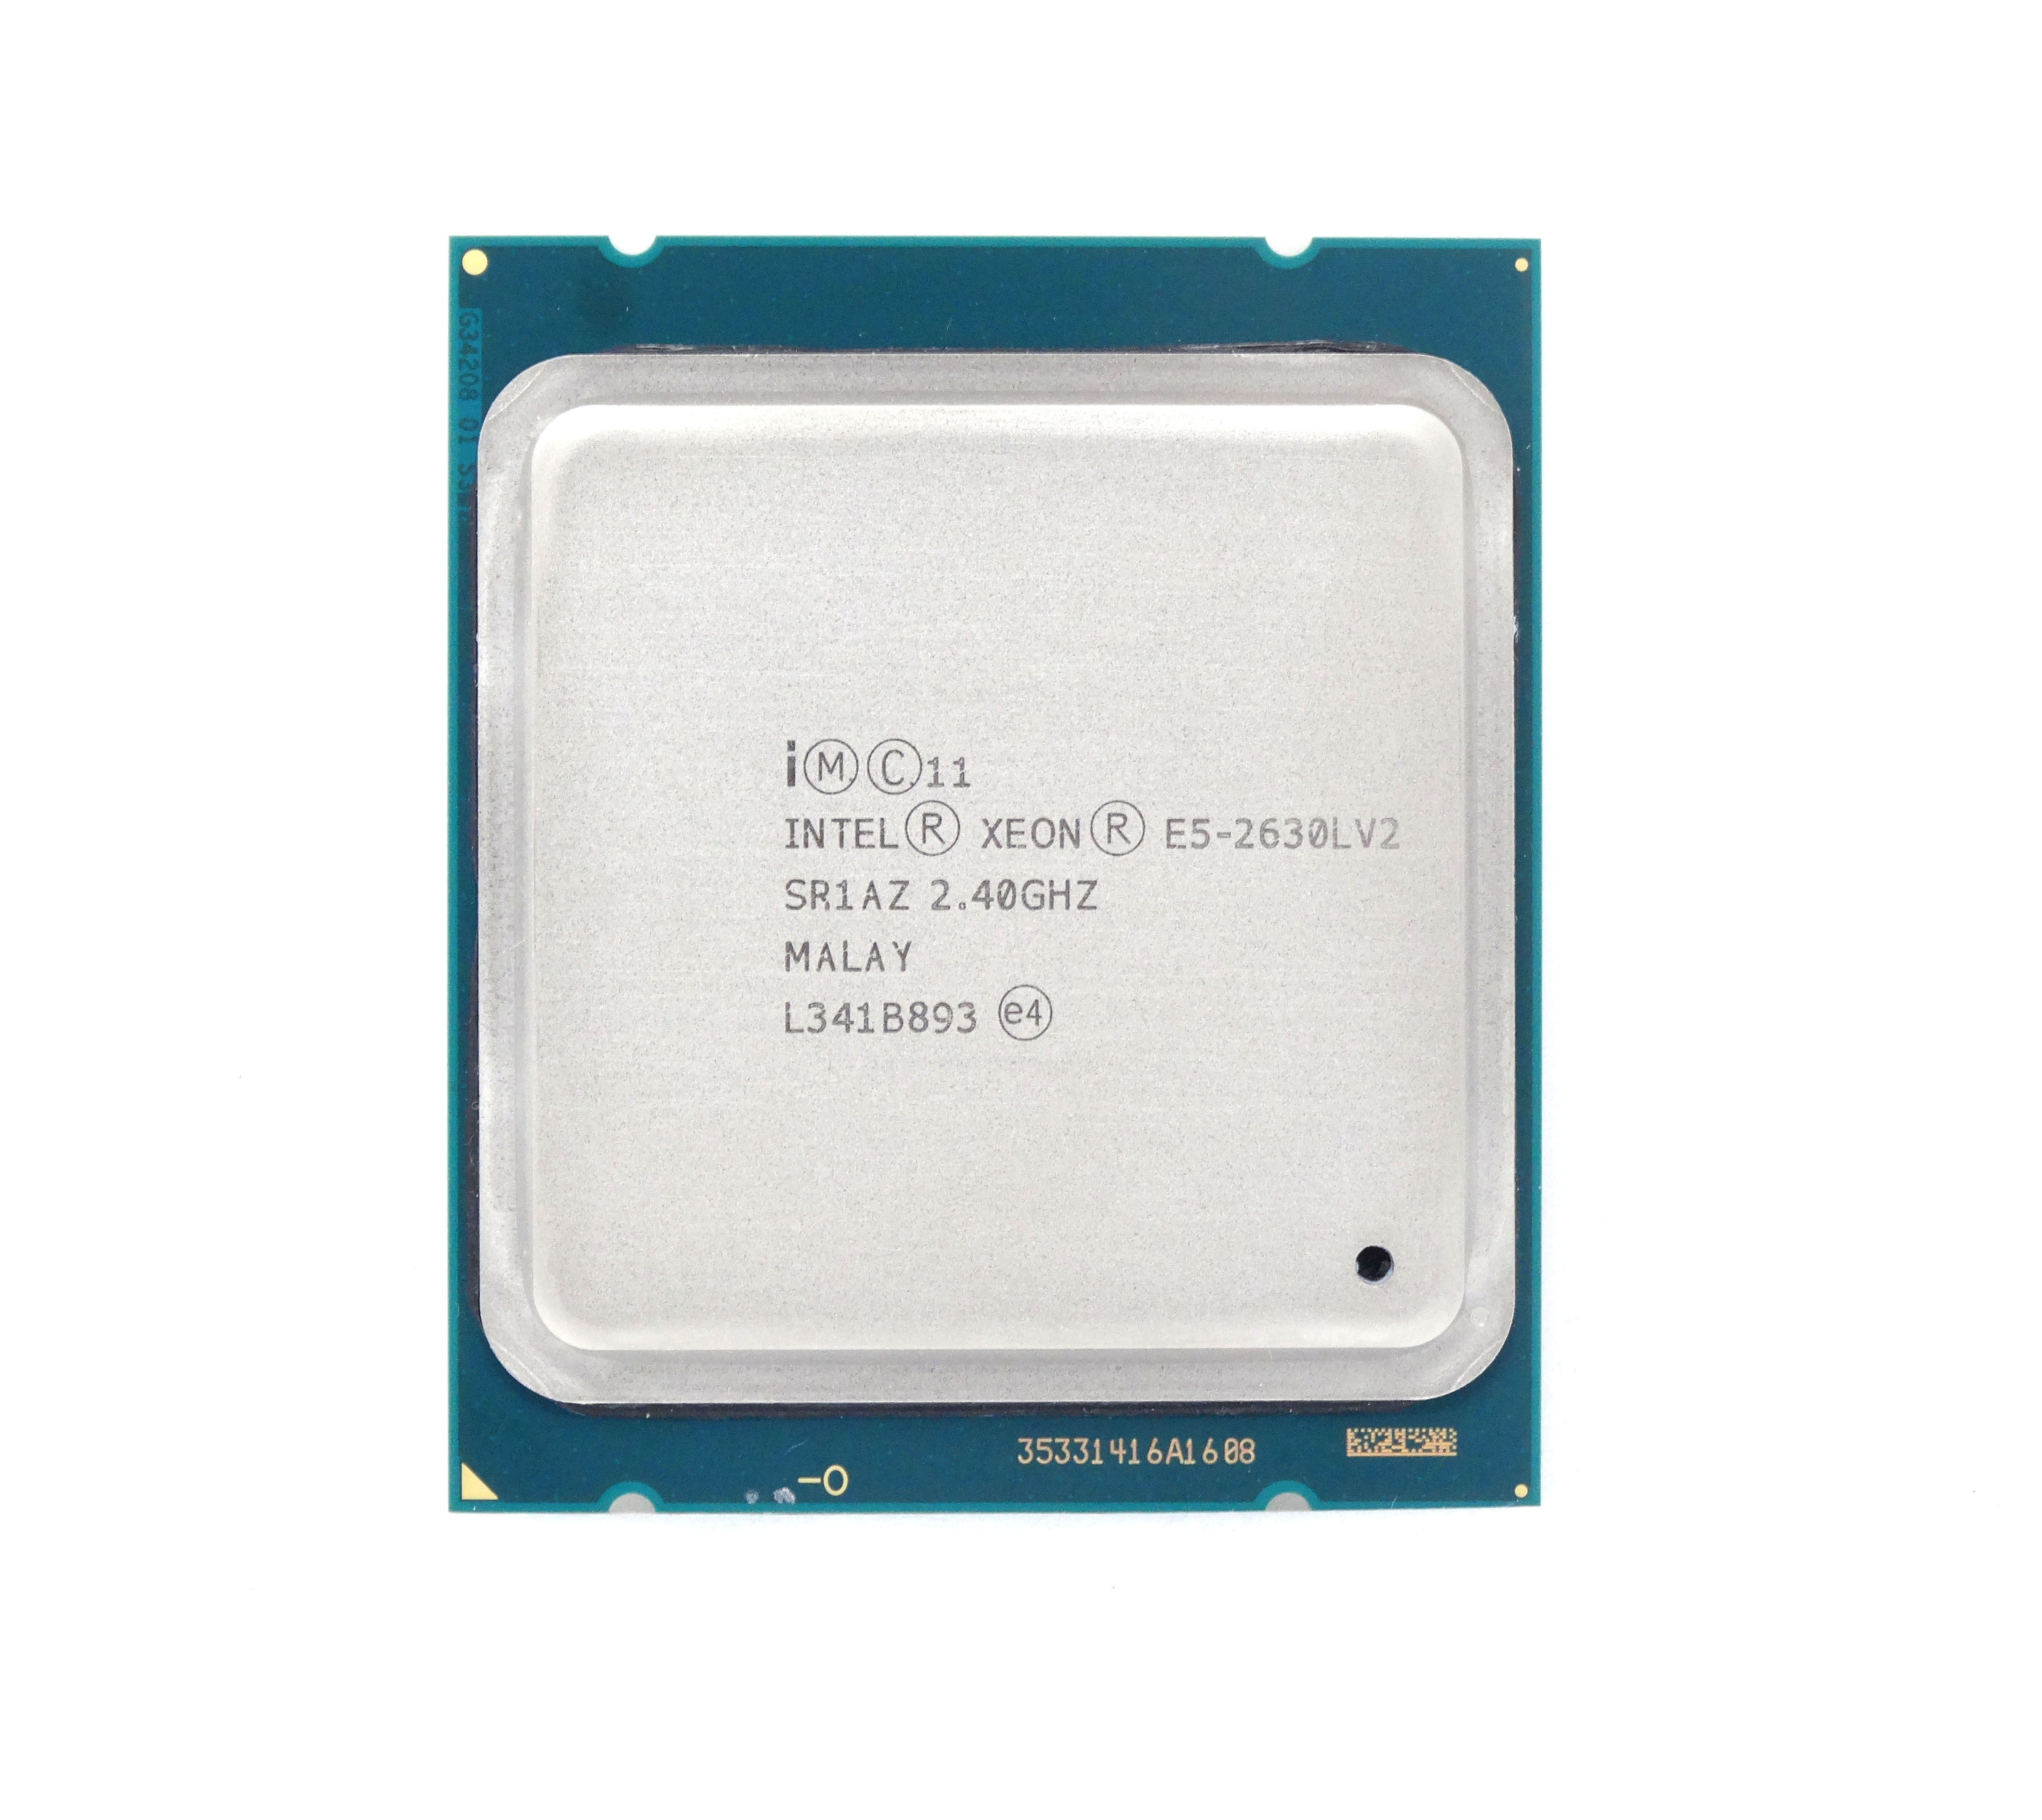 Intel Xeon E5-2630LV2 2.4GHz 6 Core 7.2GT/s 15MB LGA2011 CPU Processor (SR1AZ)